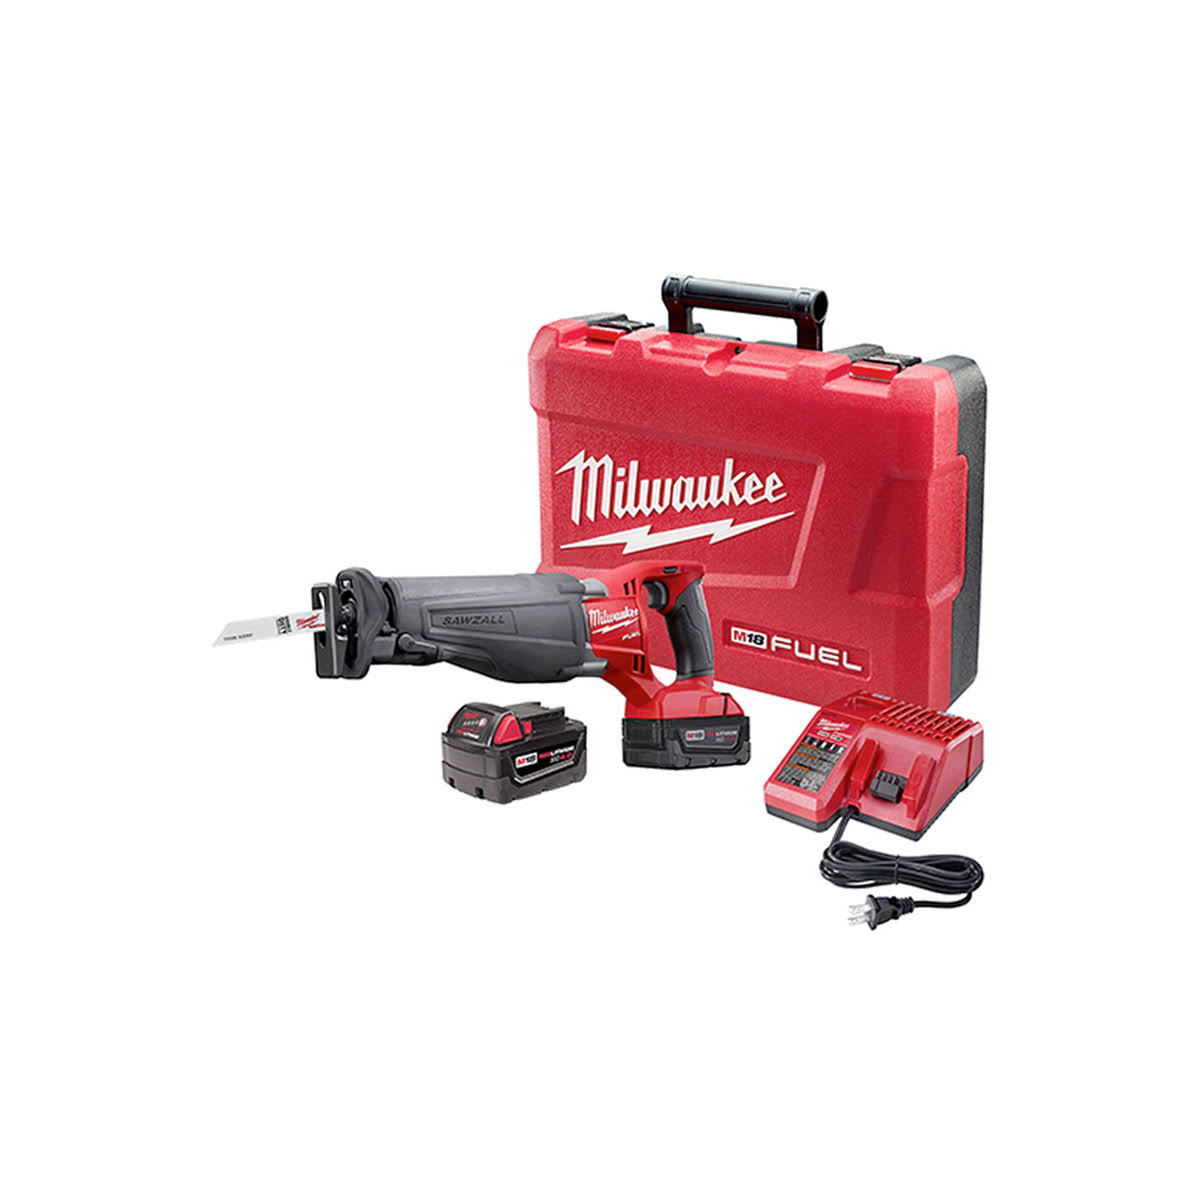 Milwaukee M18 Fuel Sawzall Reciprocating Saw Kit